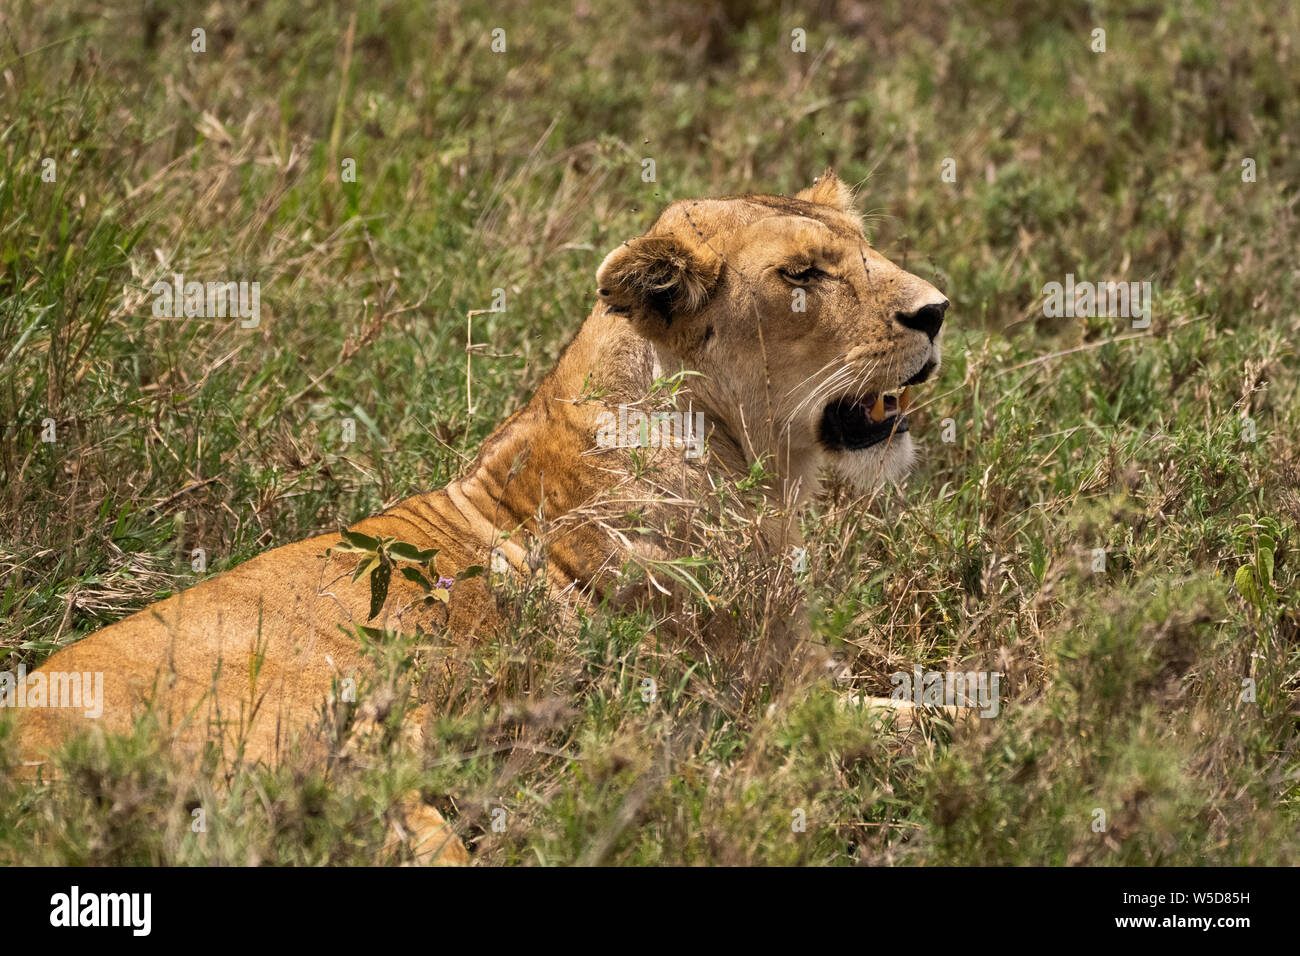 Alert Lioness (Panthera leo) waiting in the grass. Photographed at Serengeti National Park, Tanzania Stock Photo